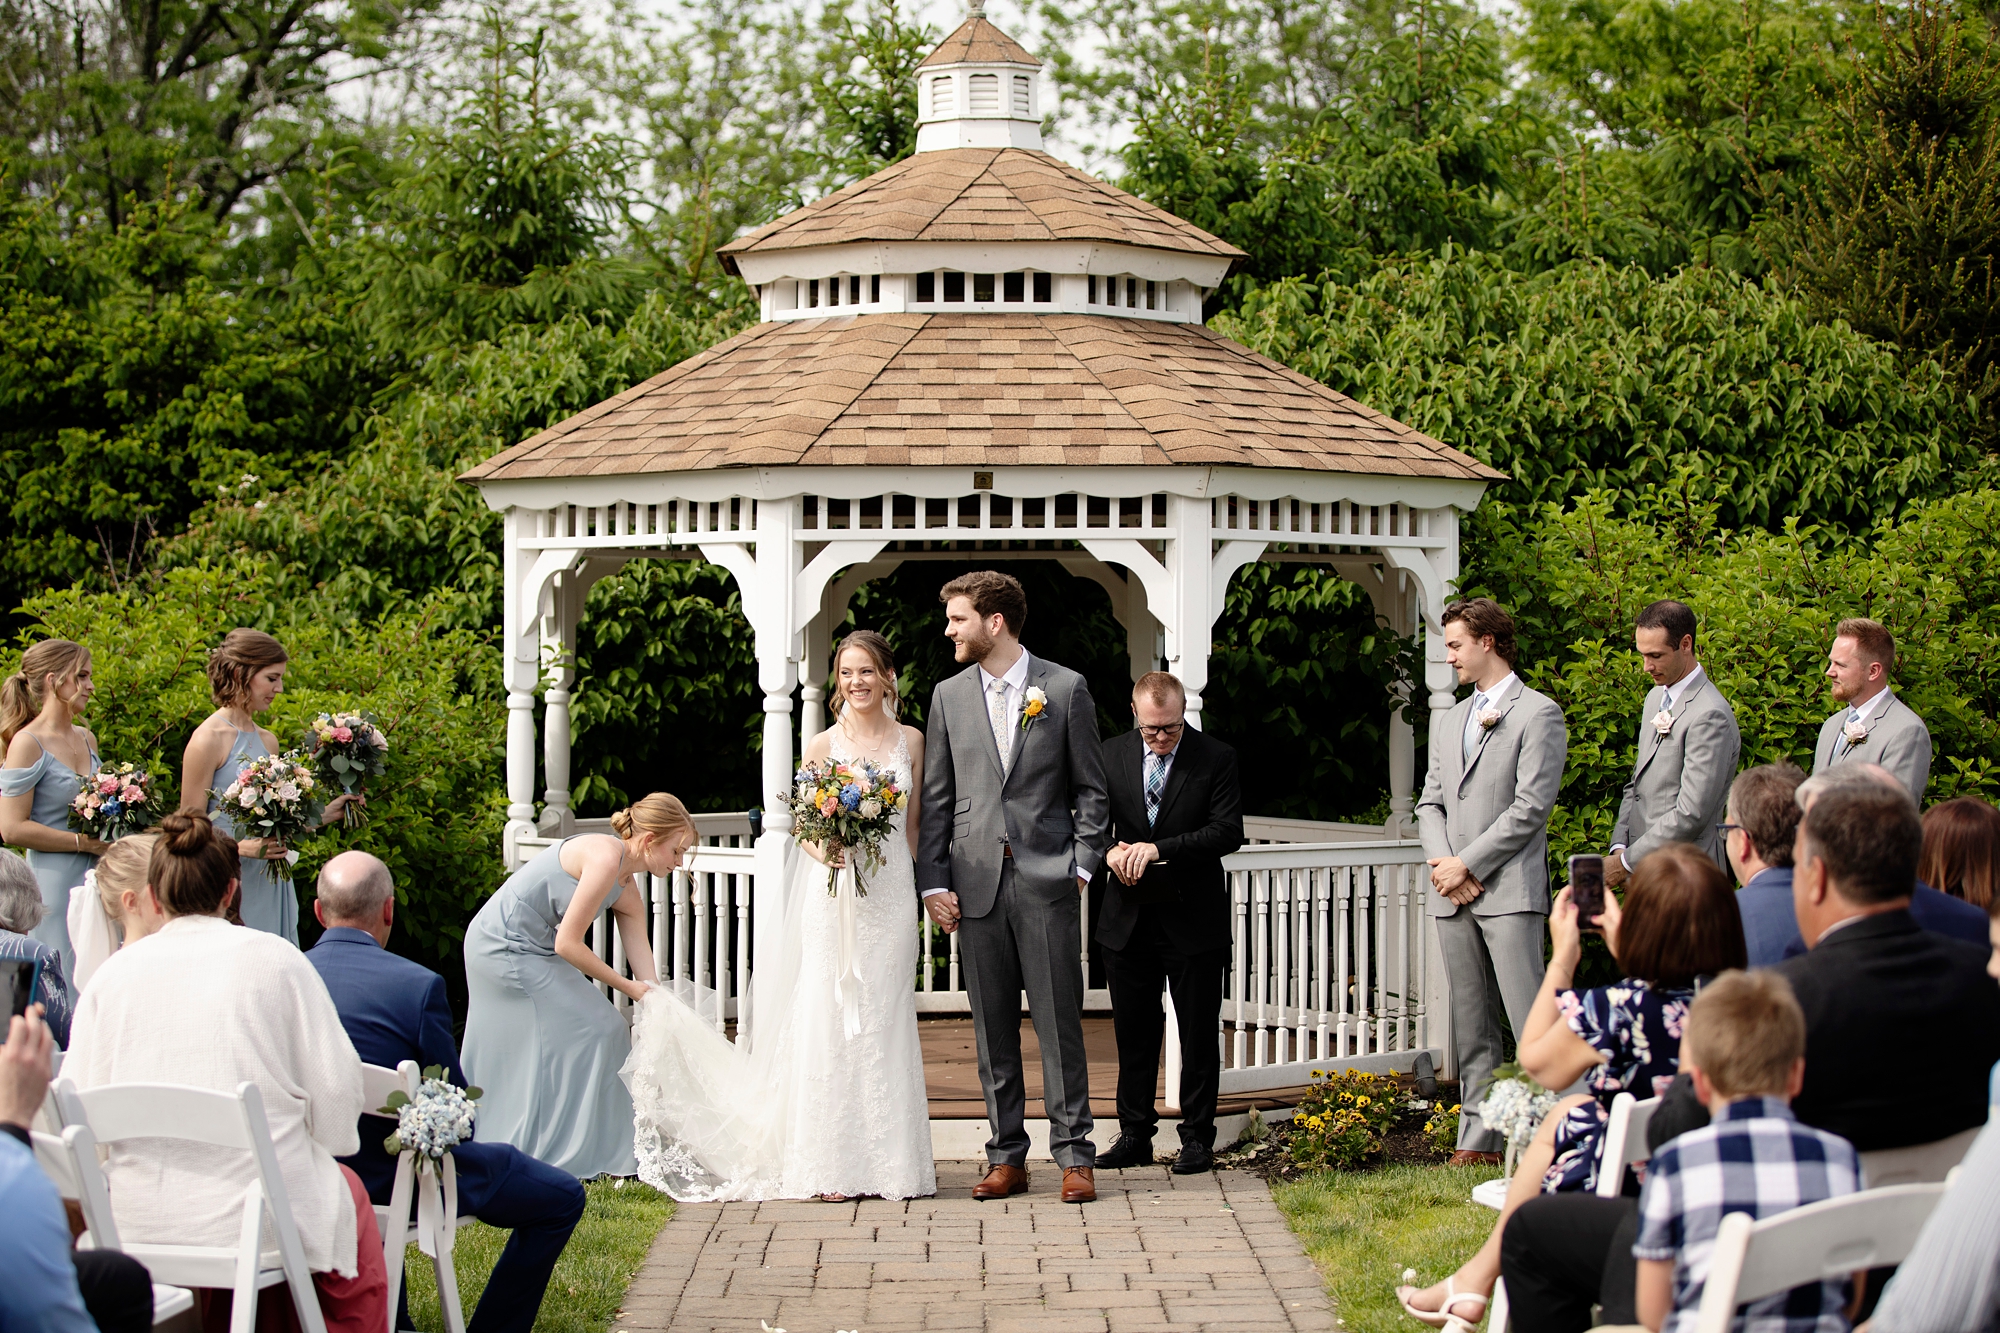 The Farmhouse NJ Wedding, New Jersey Wedding Photographer